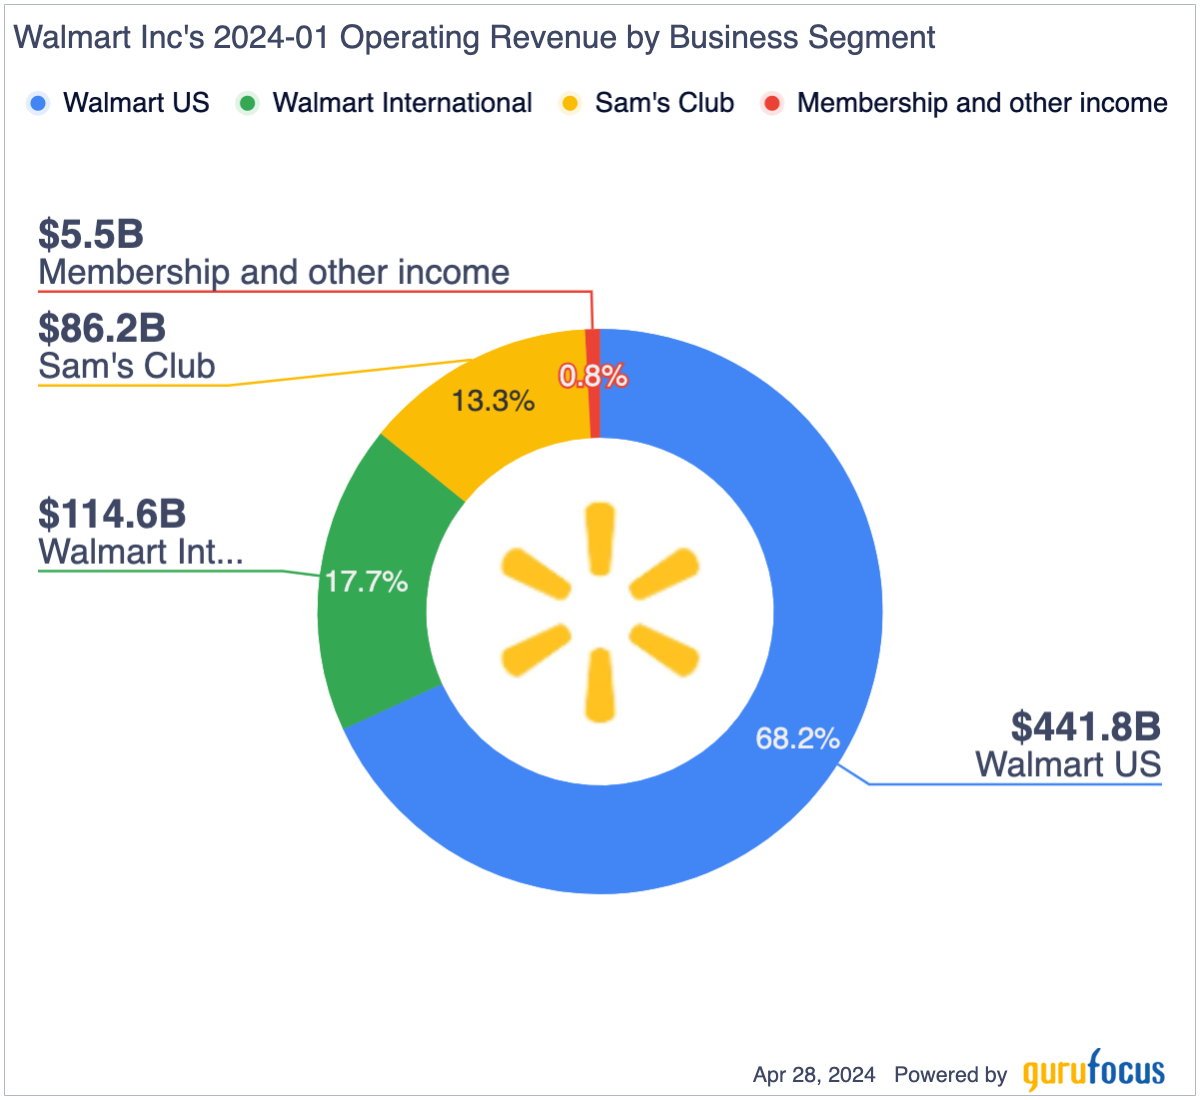 Does Walmart Deserve Its Premium Valuation? - Yahoo Finance